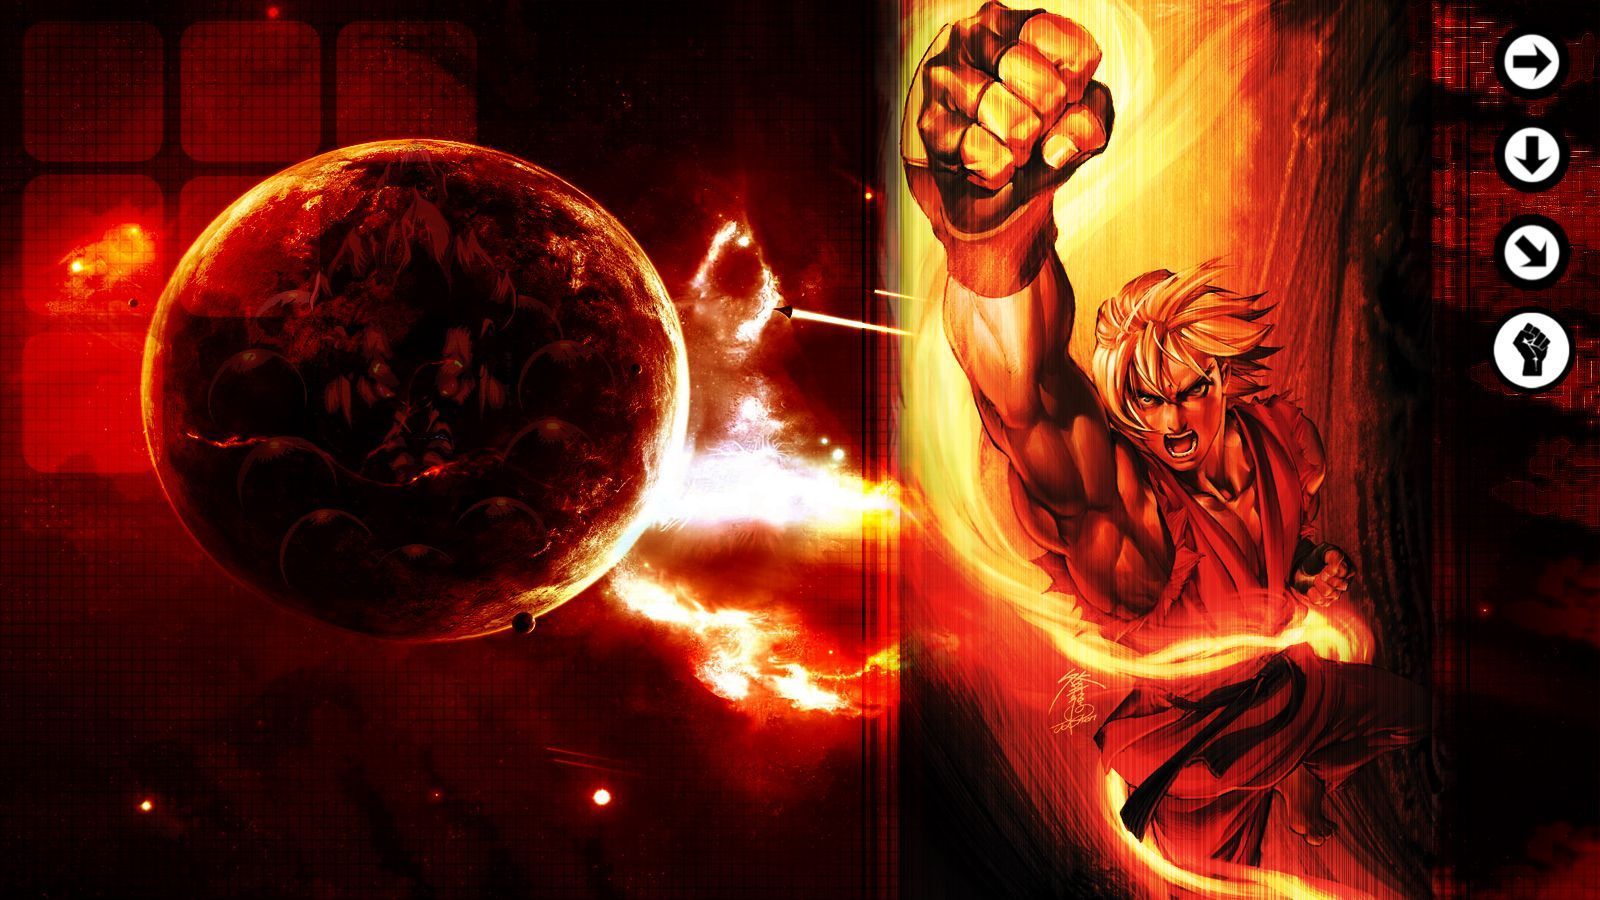 Ken-Street-Fighter-Wallpaper-Background-PC.jpg